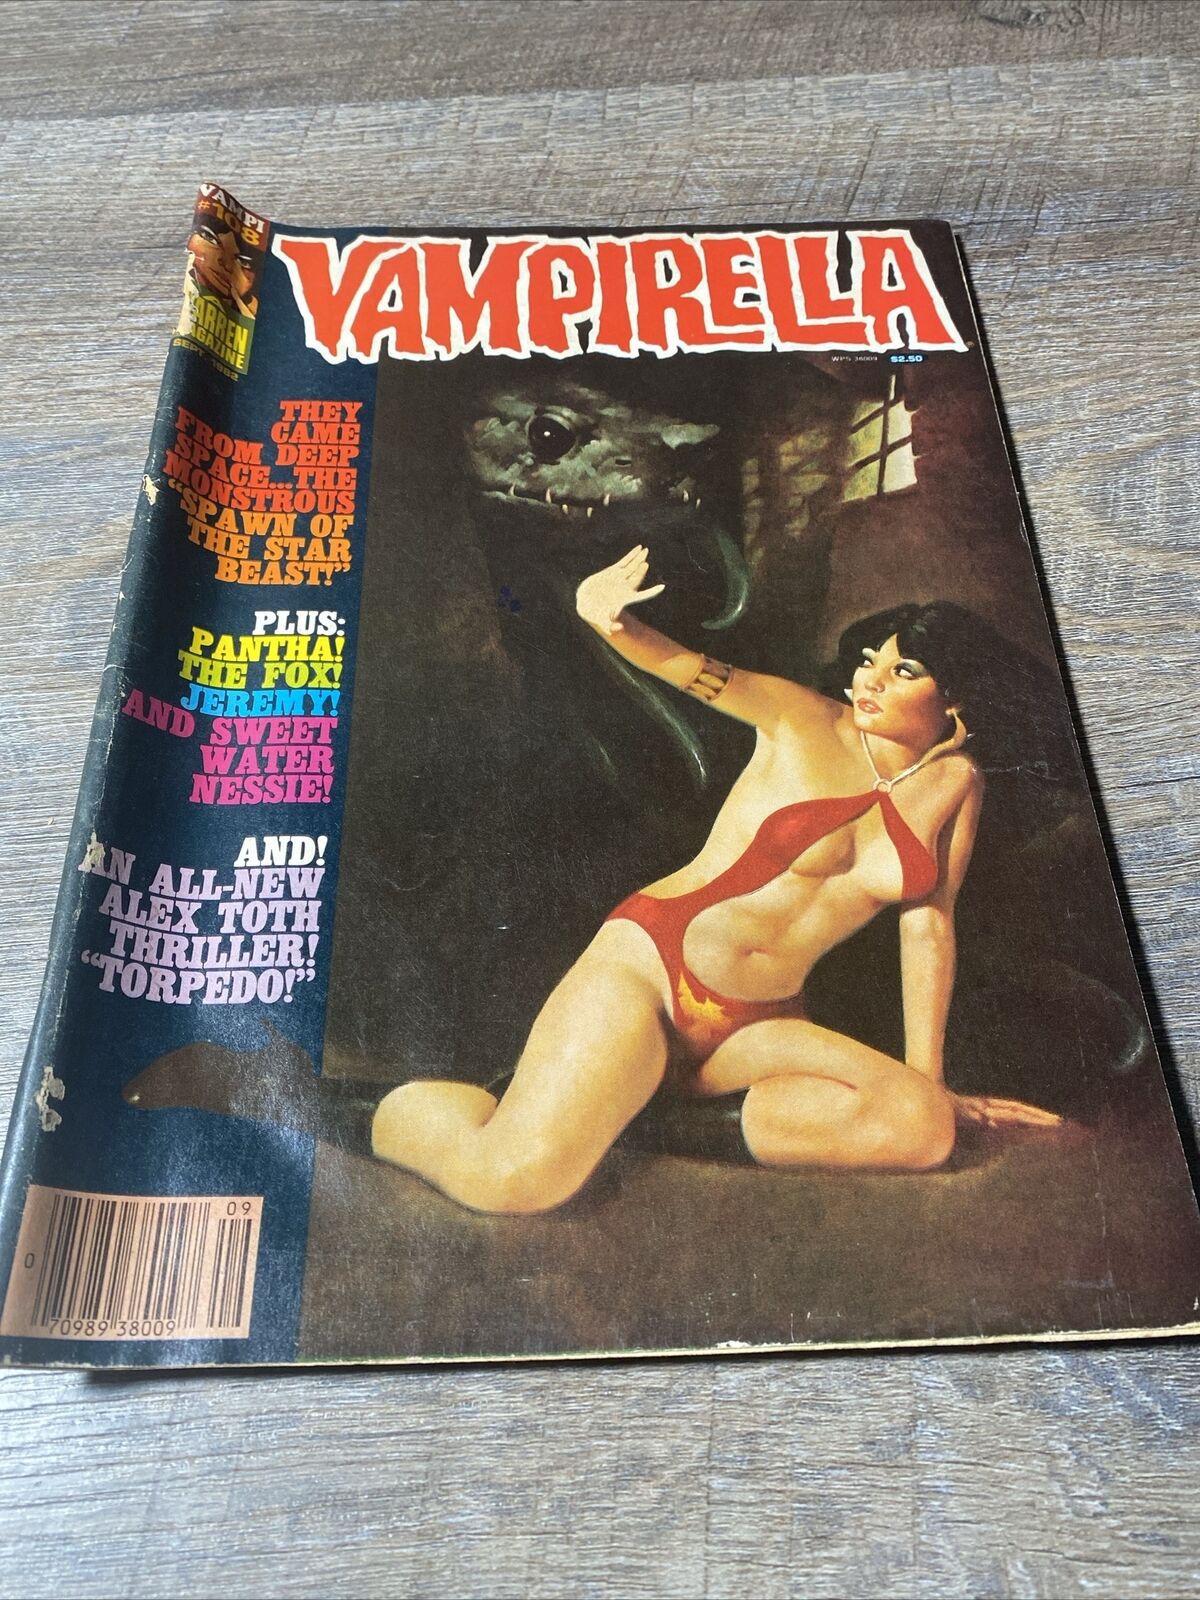 VAMPIRELLA MAGAZINE VAMPI # 108 September 1982 Warren Cover art by Enrich Torres